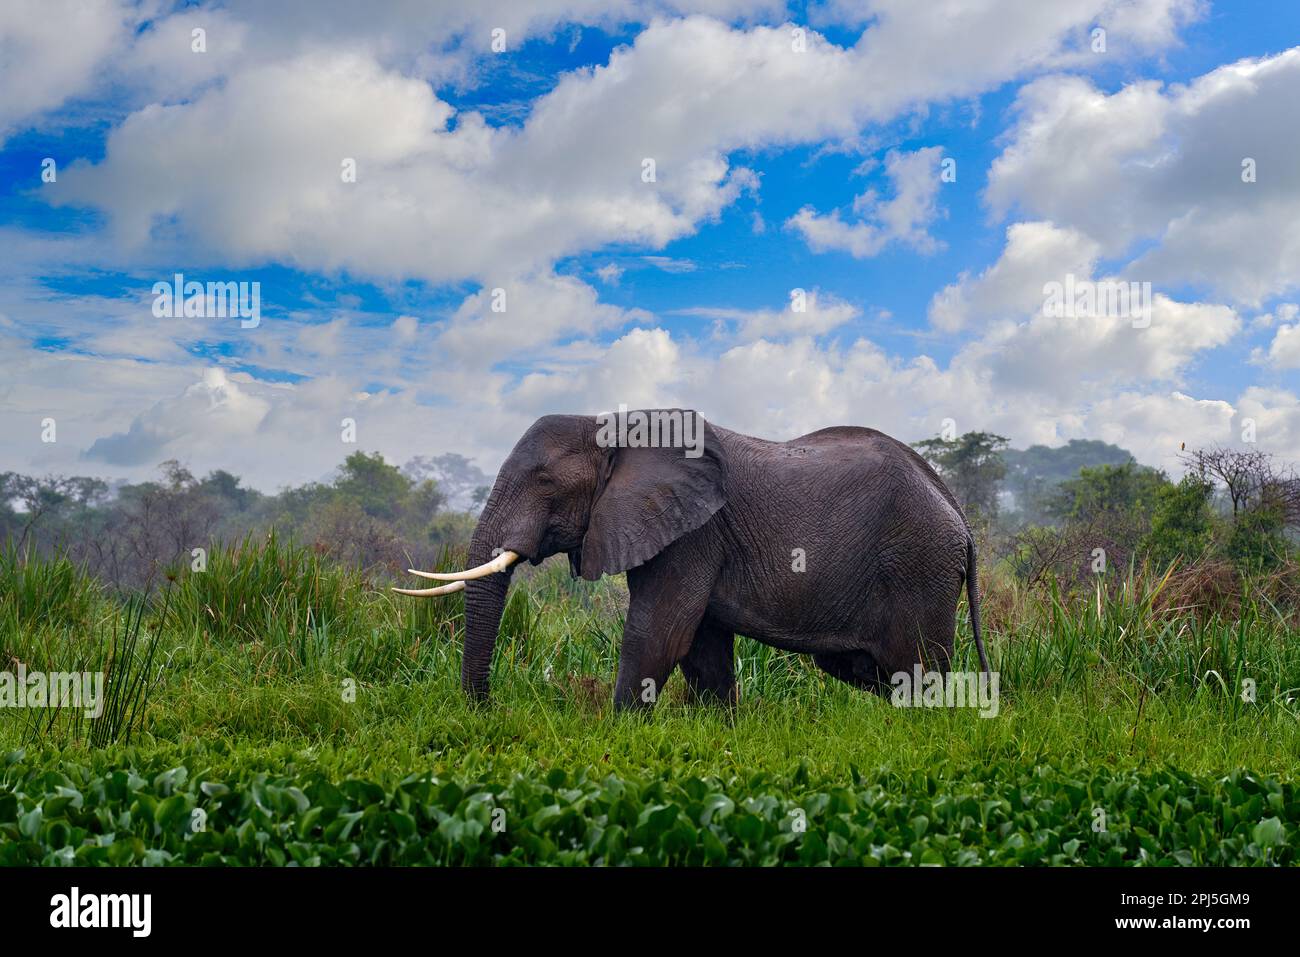 Uganda wildlife, Africa. Elephant in rain, Victoria Nile delta. Elephant in Murchison Falls NP, Uganda. Big Mammal in the green grass, forest vegetati Stock Photo